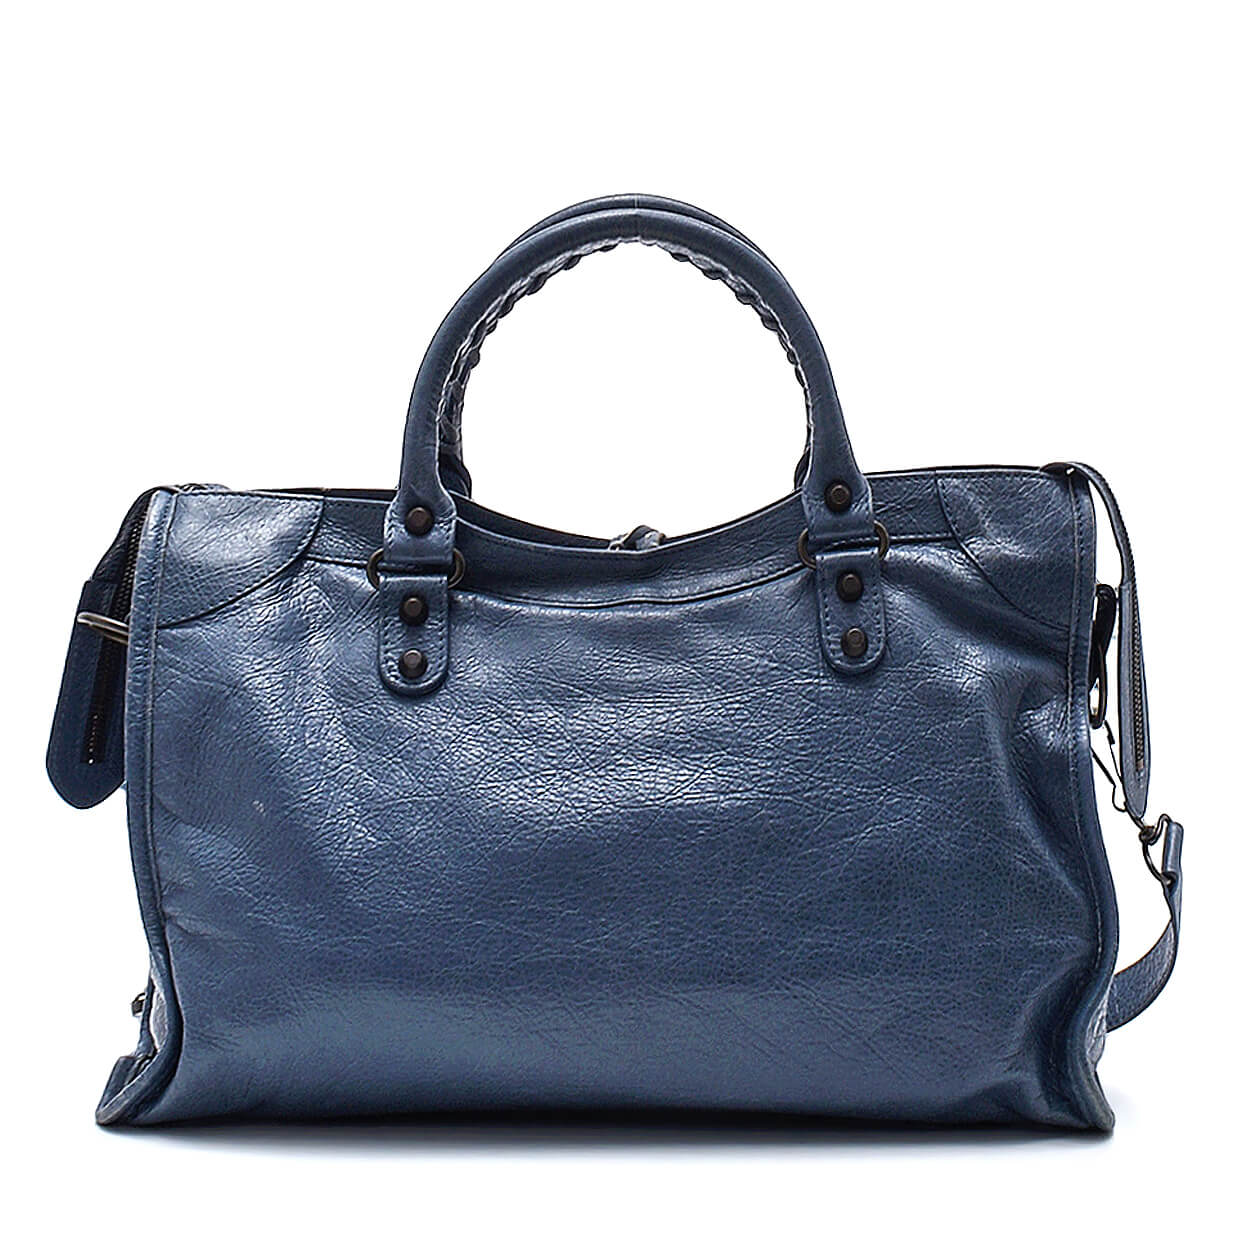 Balenciaga - Blue Leather Motorcyle Medium Handbag